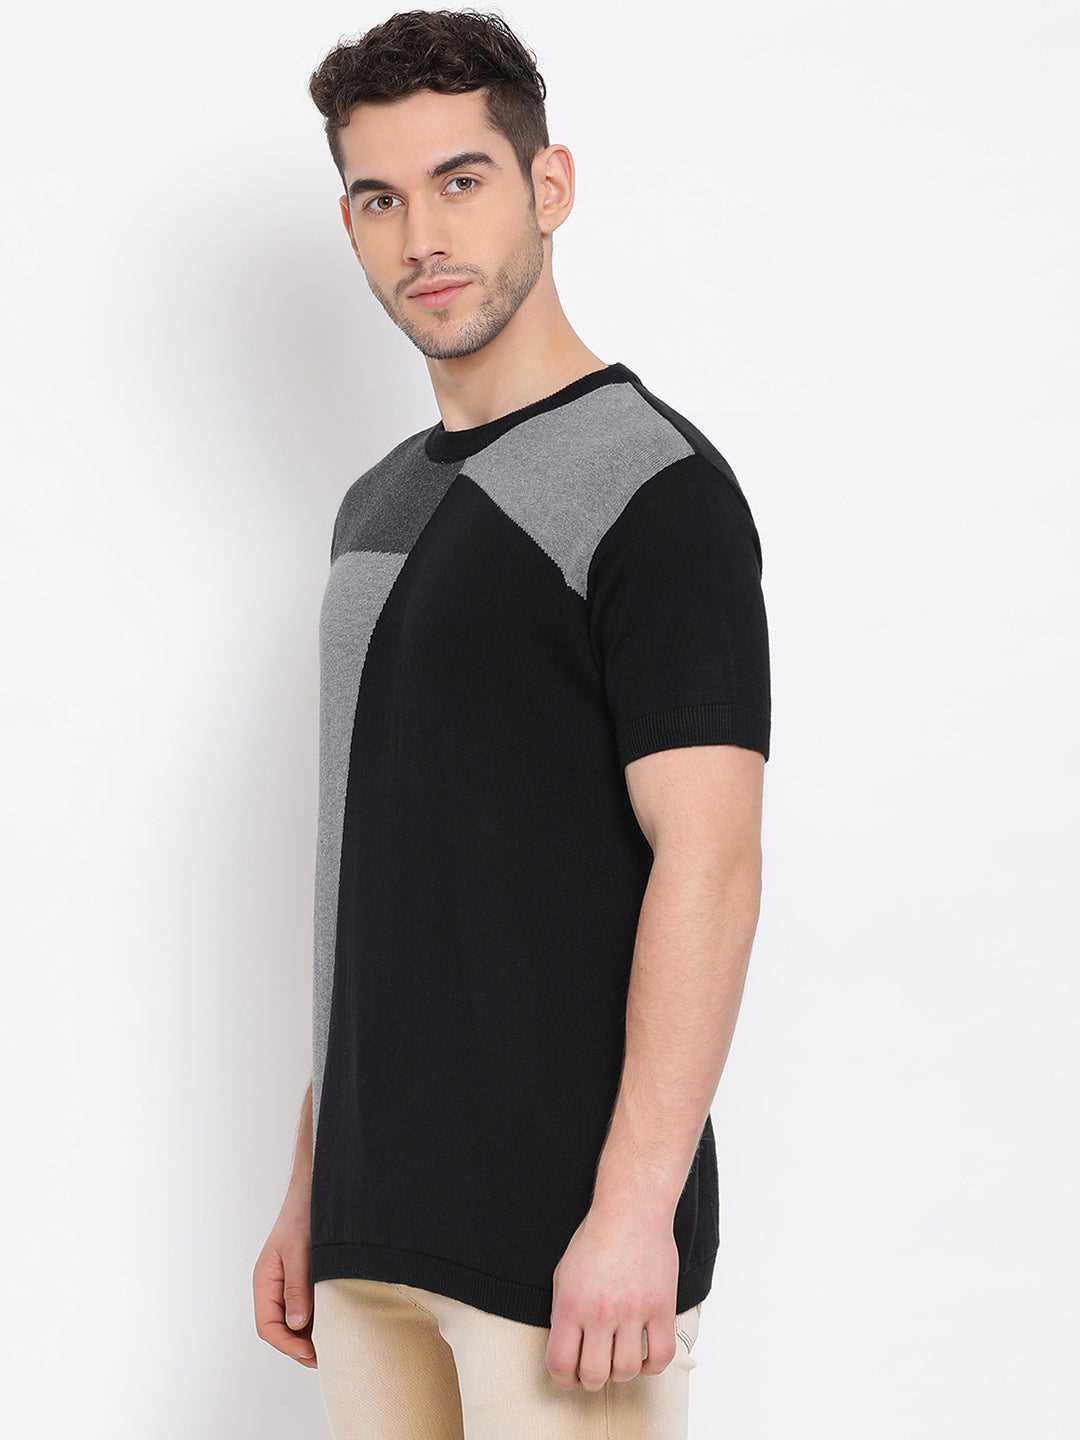 Cobb Black Striped Round Neck T-Shirt